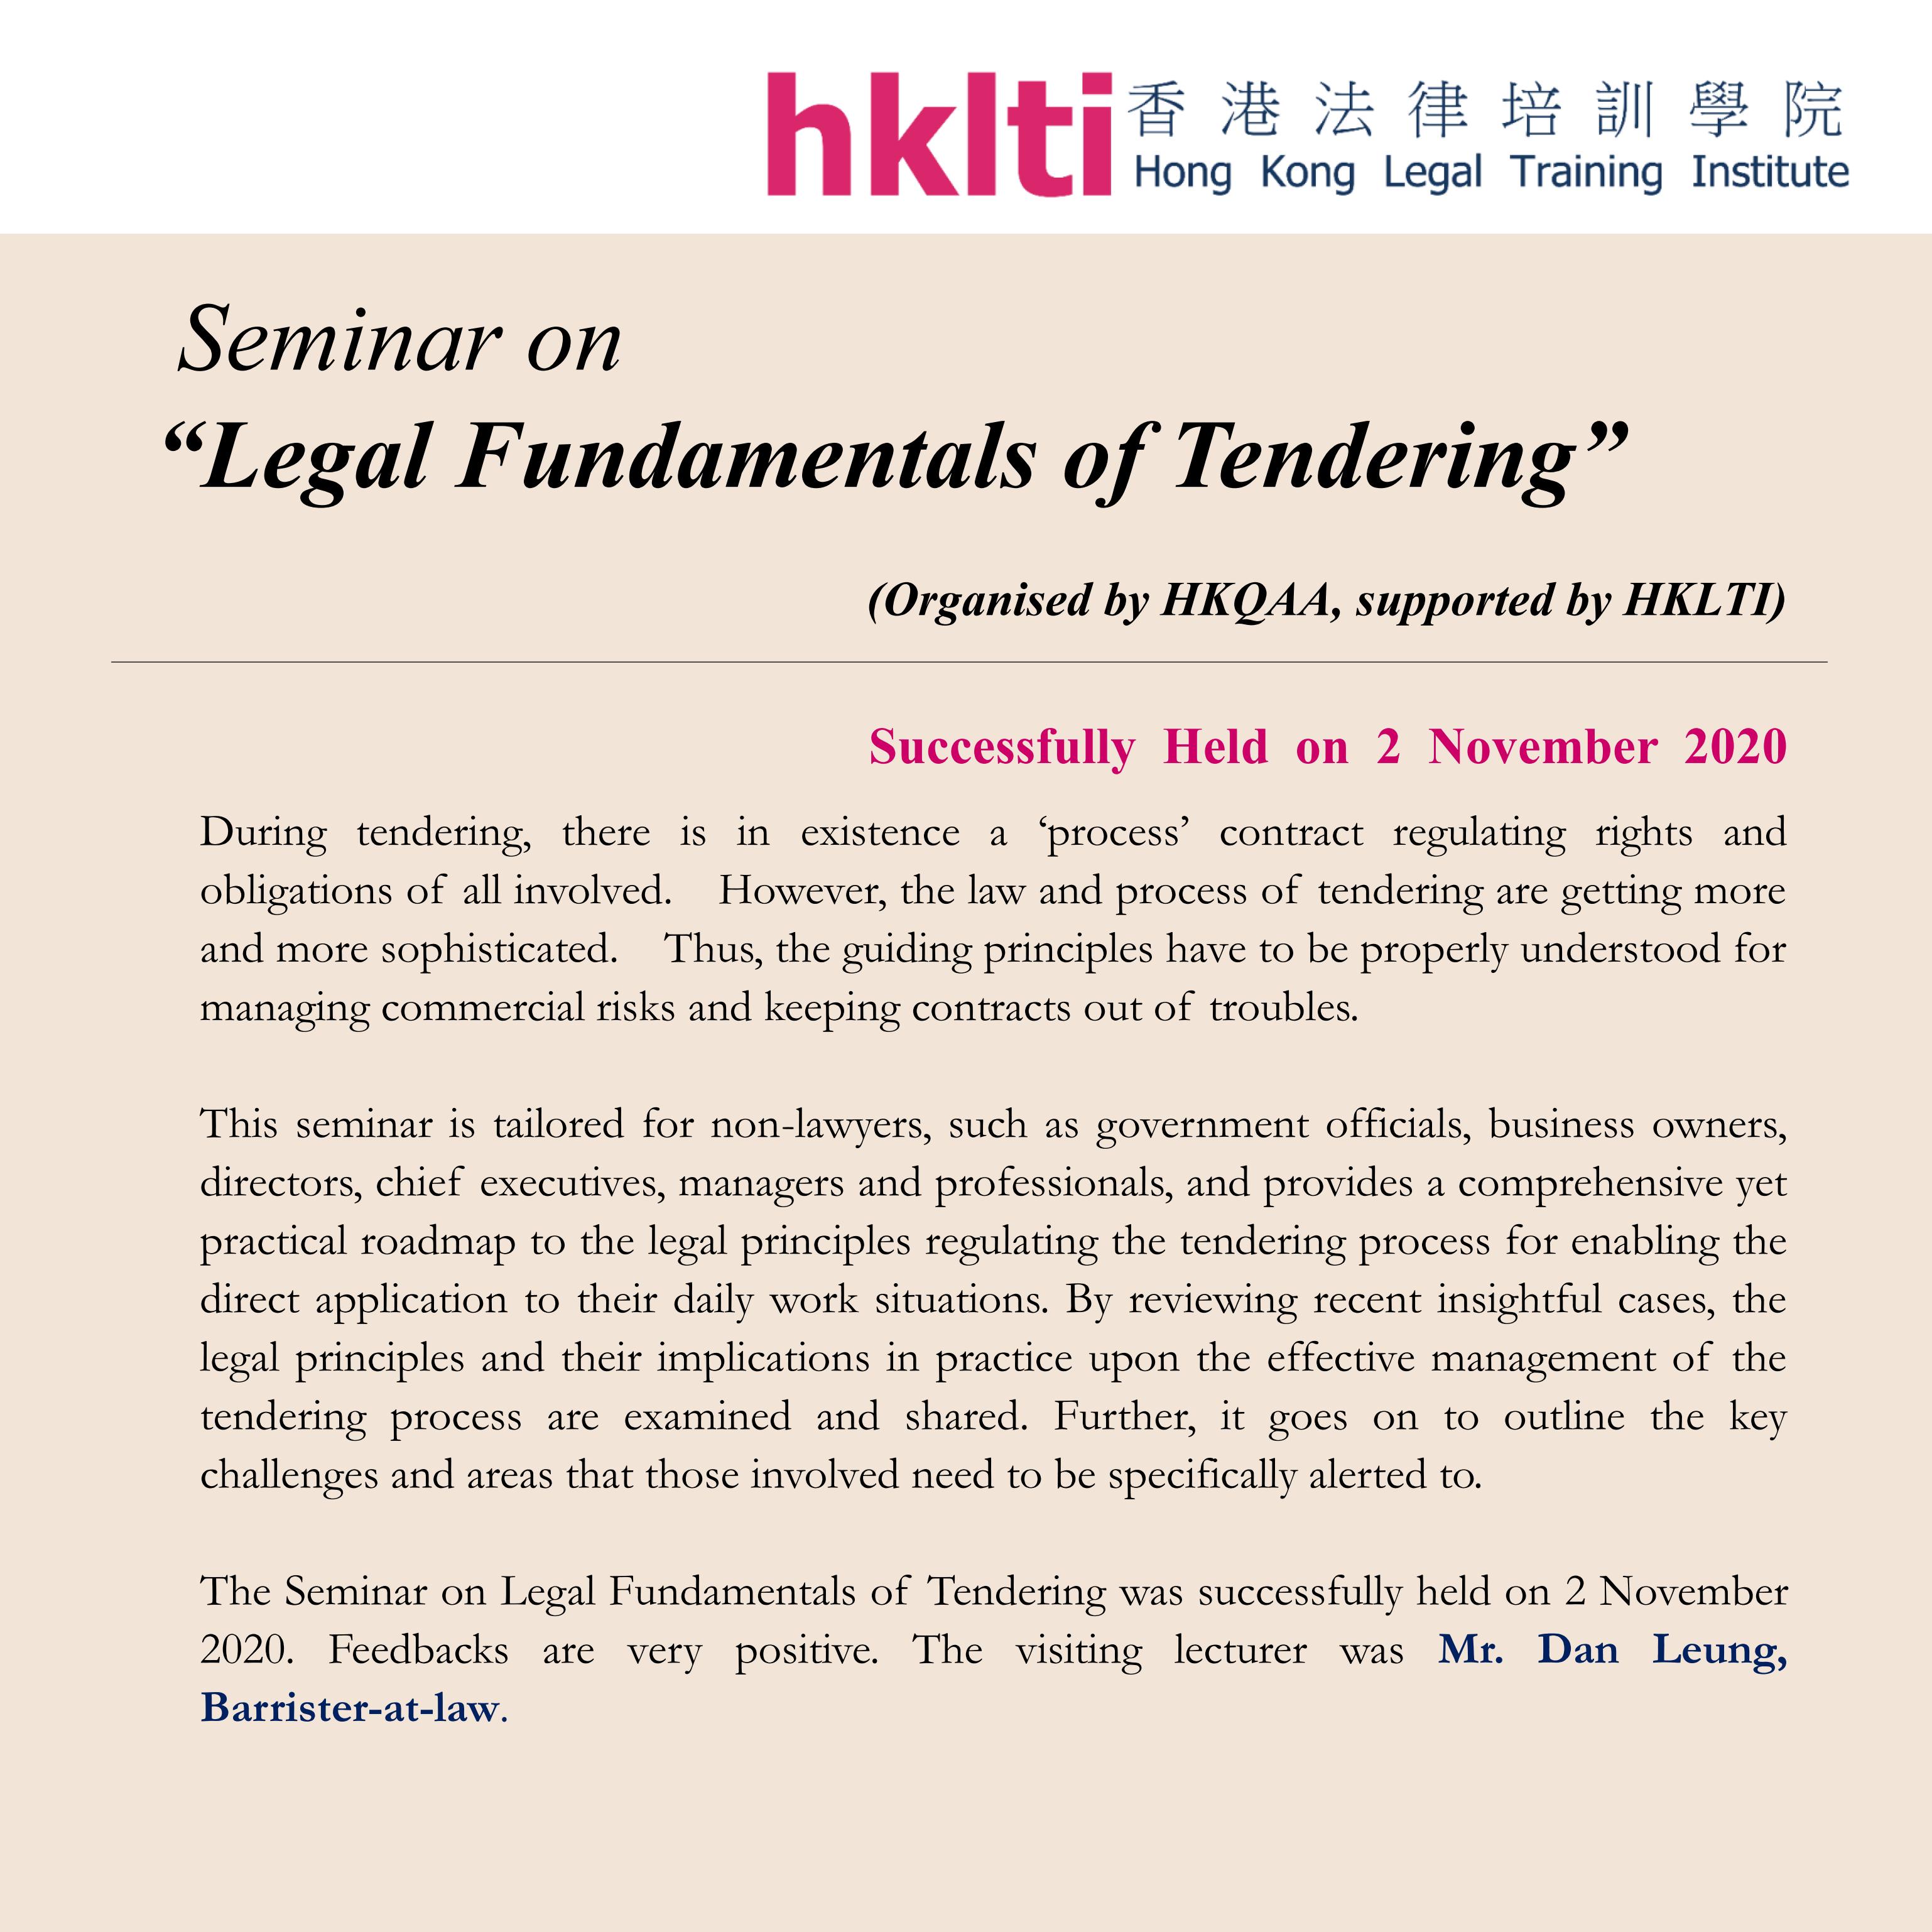 hklti hkqaa legal fundamentals of tendering seminar report 20201102